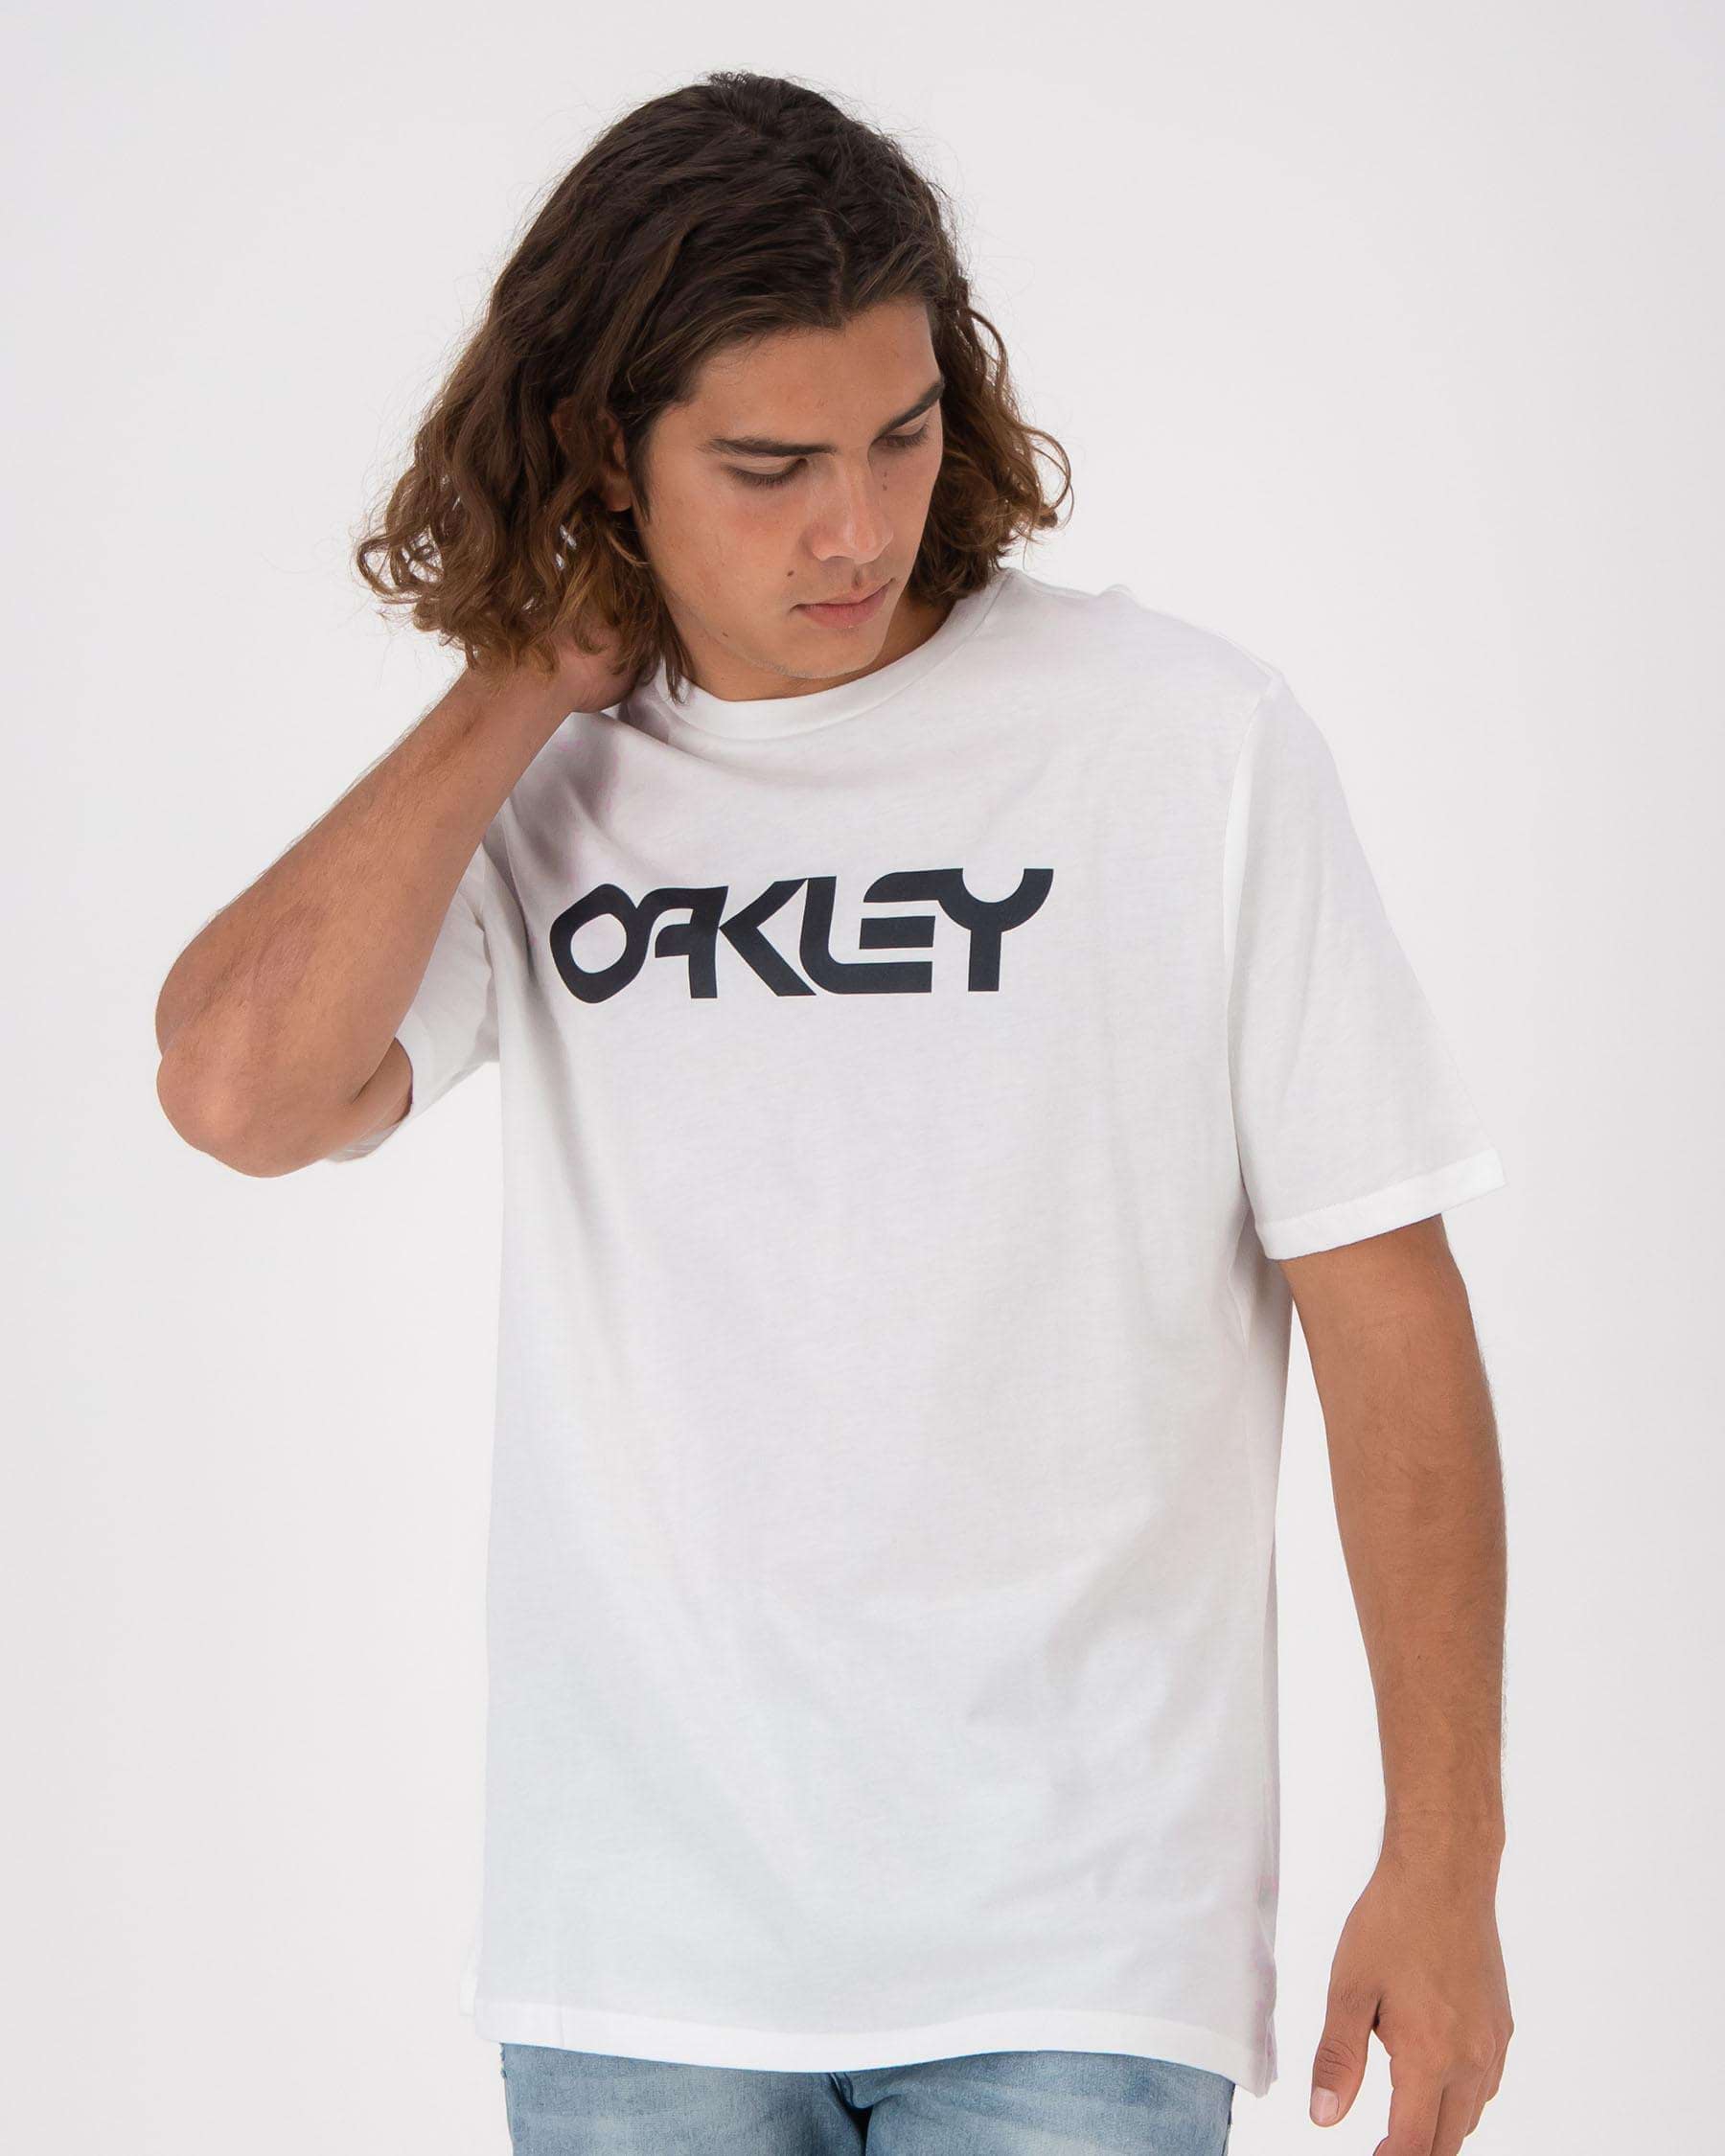 oakley t shirt sizing